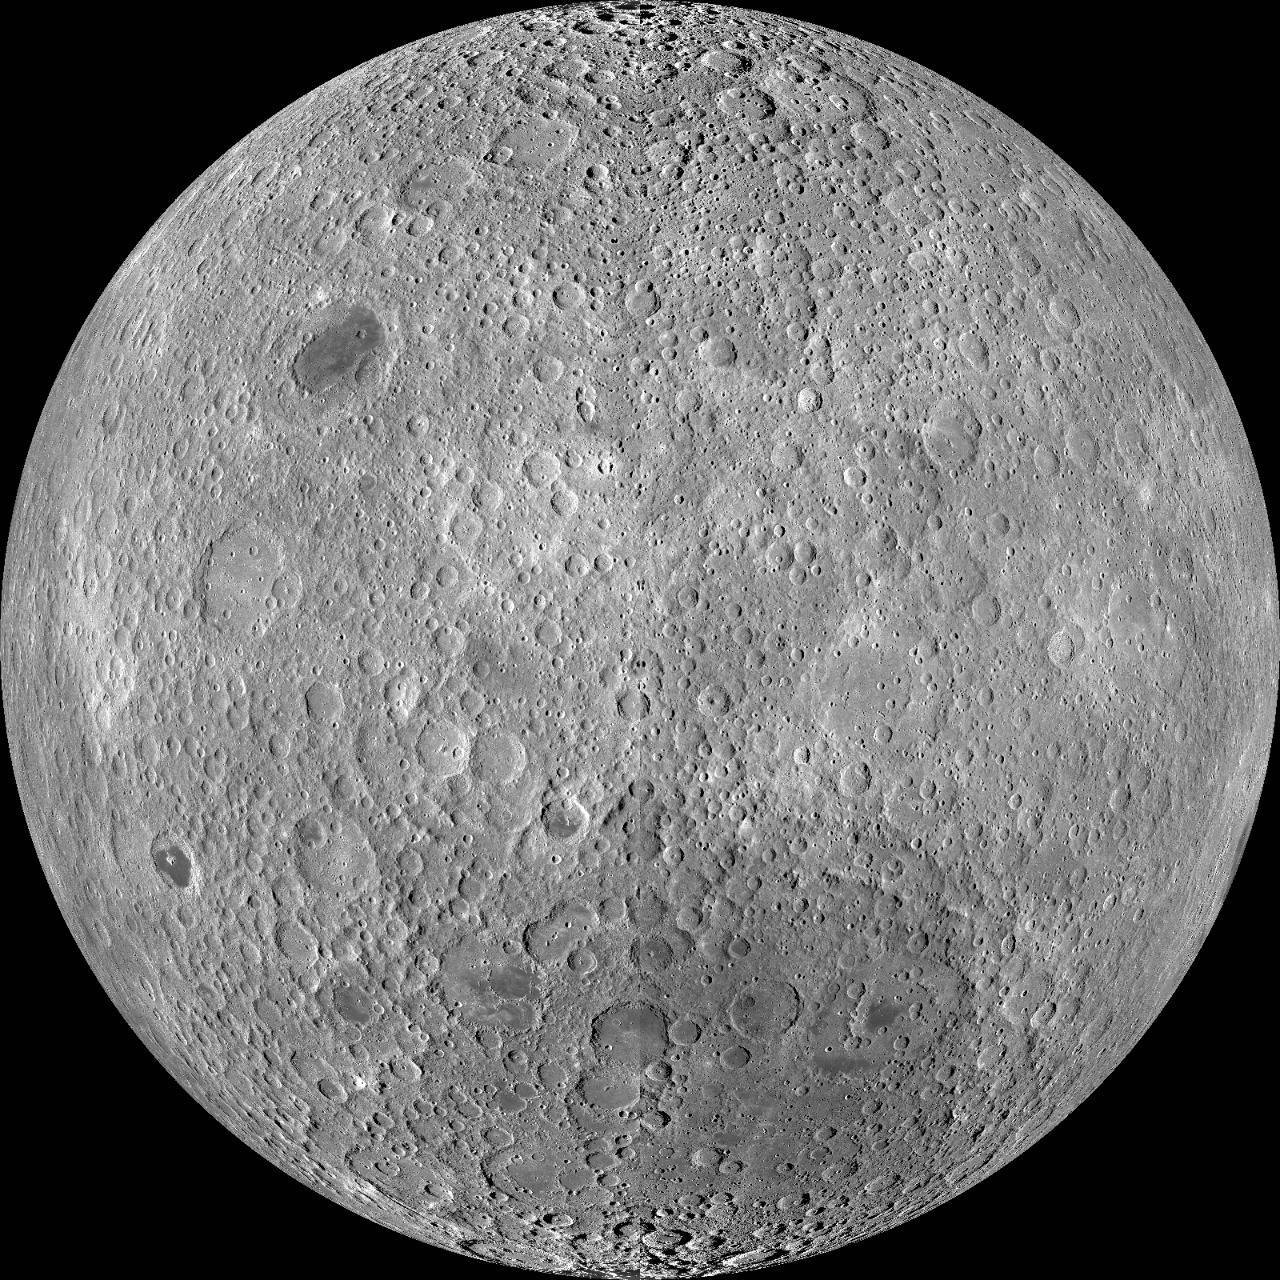 Lado oculto da Lua possui mais crateras do que a face que se pode ver da Terra